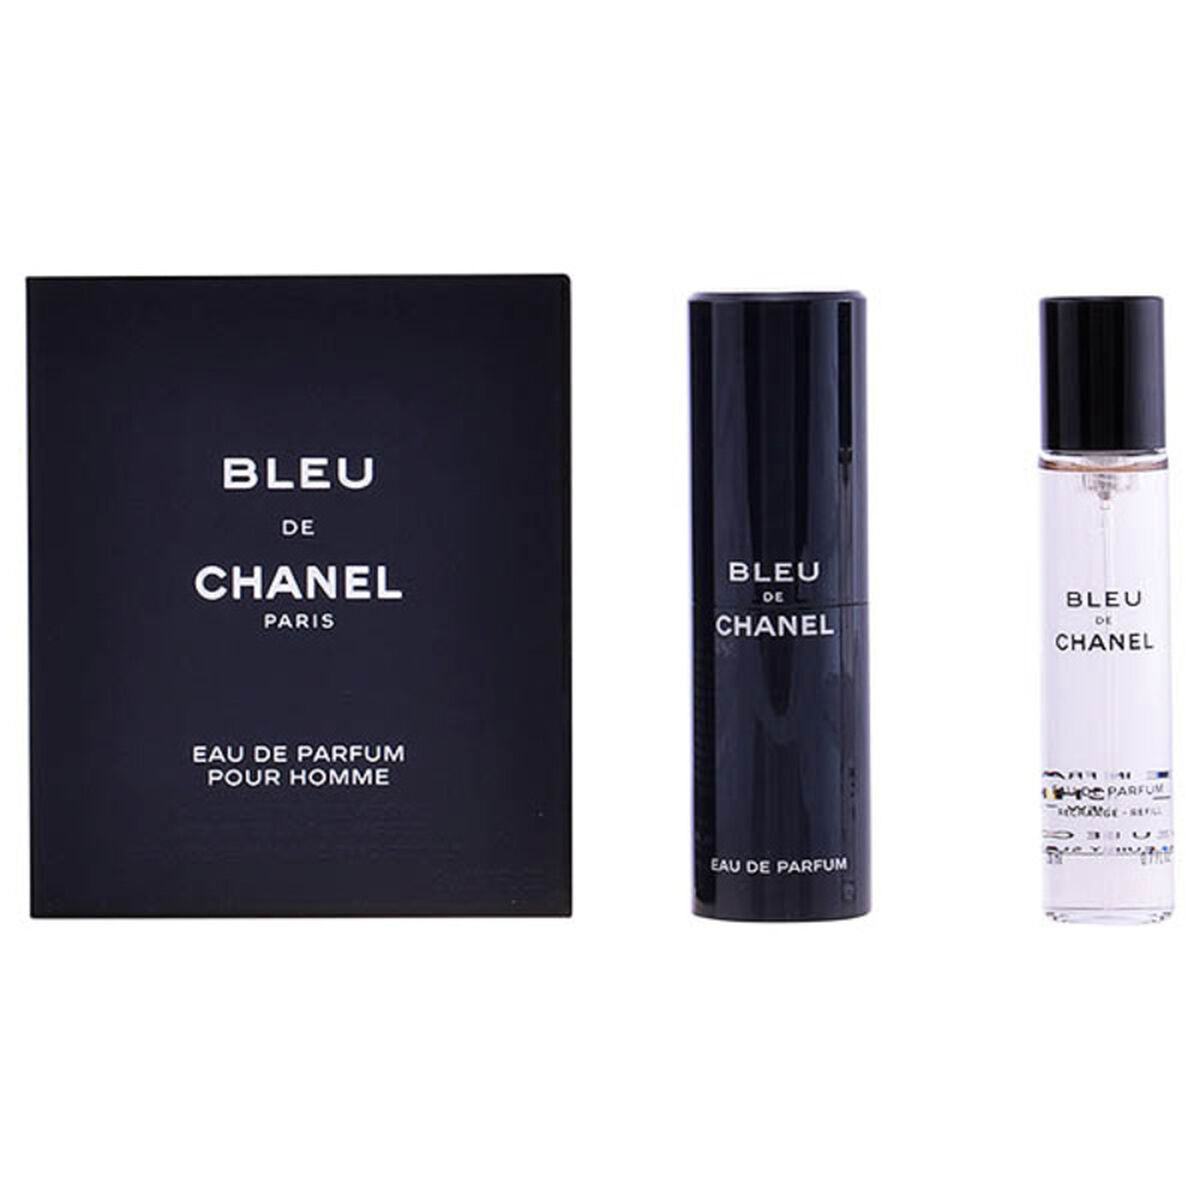 Kaufe Set mit Bleu Chanel 107300 3 Stk. EDP 20 ml - Herren bei AWK Flagship um € 143.00